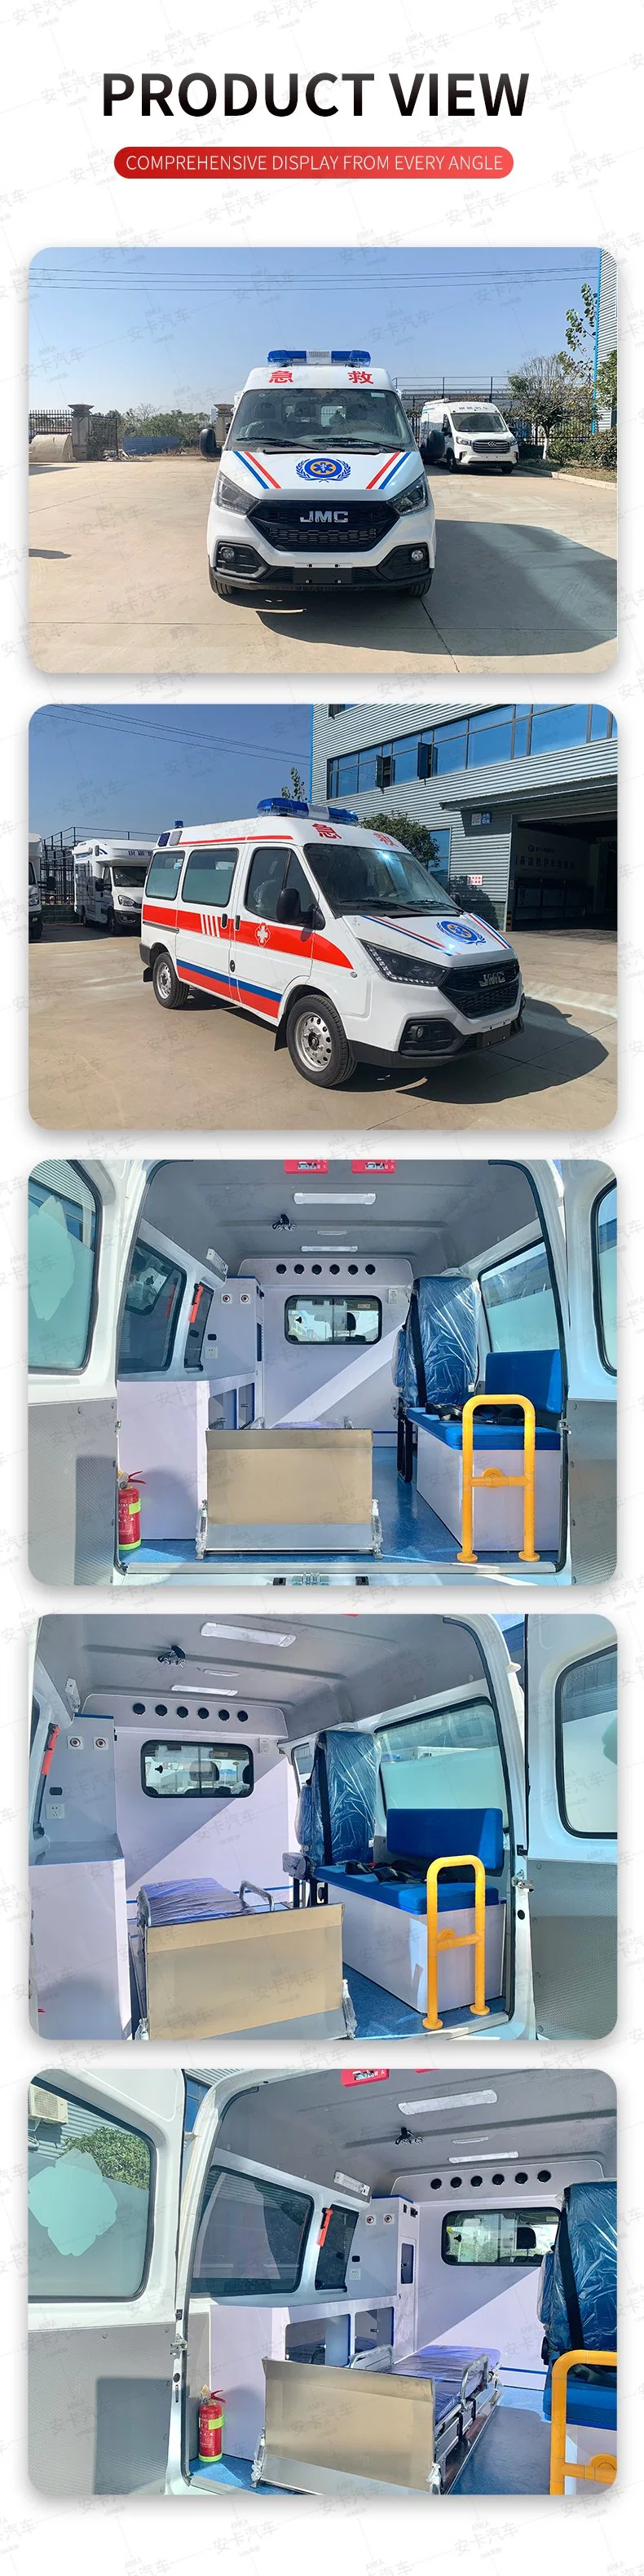 China Brand Jmc Ambulance Car Price Medical Vehicle Ambulance Vehicle